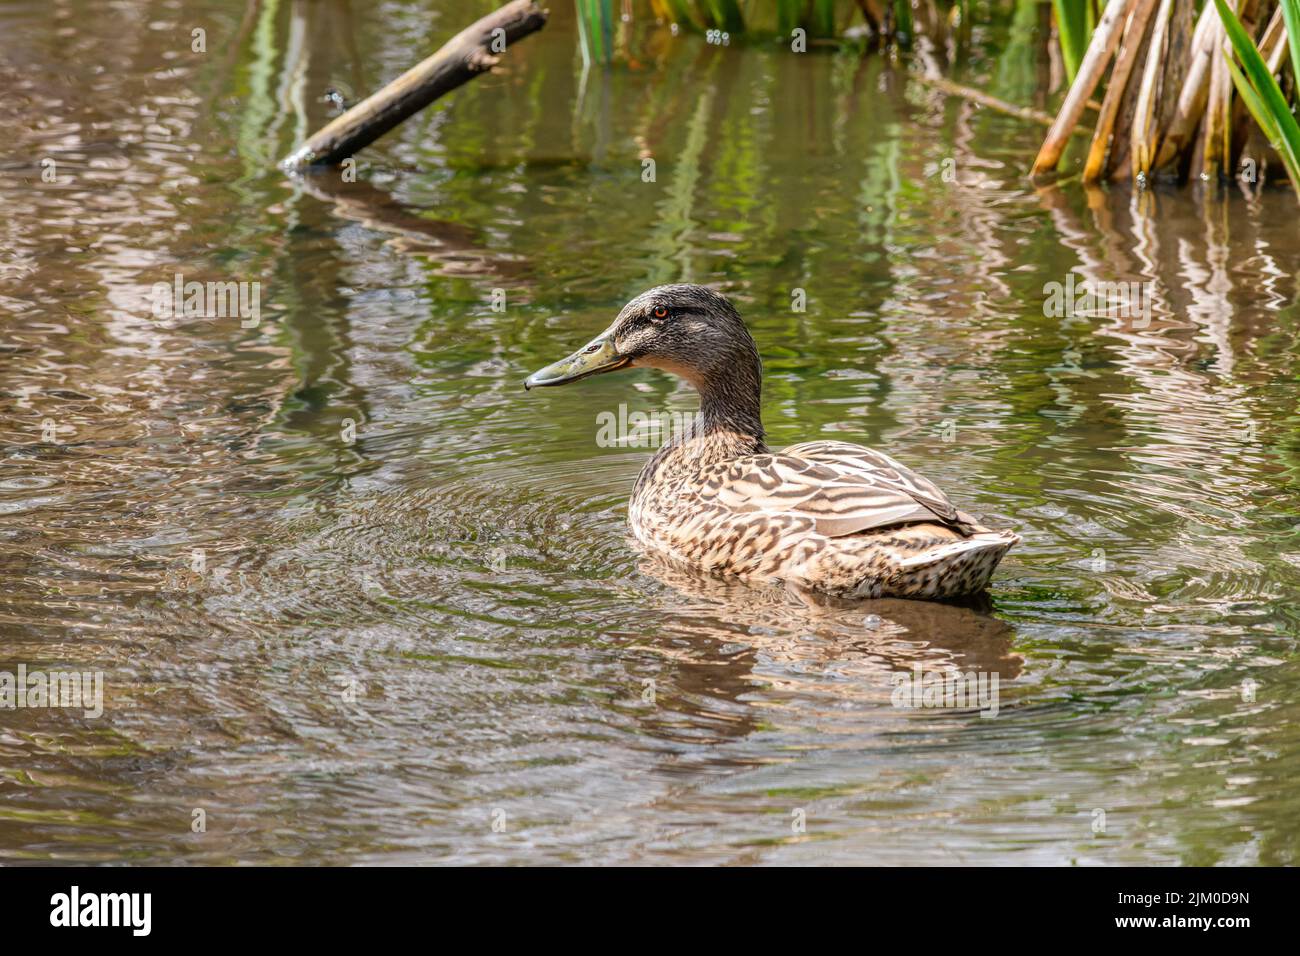 A closeup shot of a brown mallard duck swimming in a pond Stock Photo